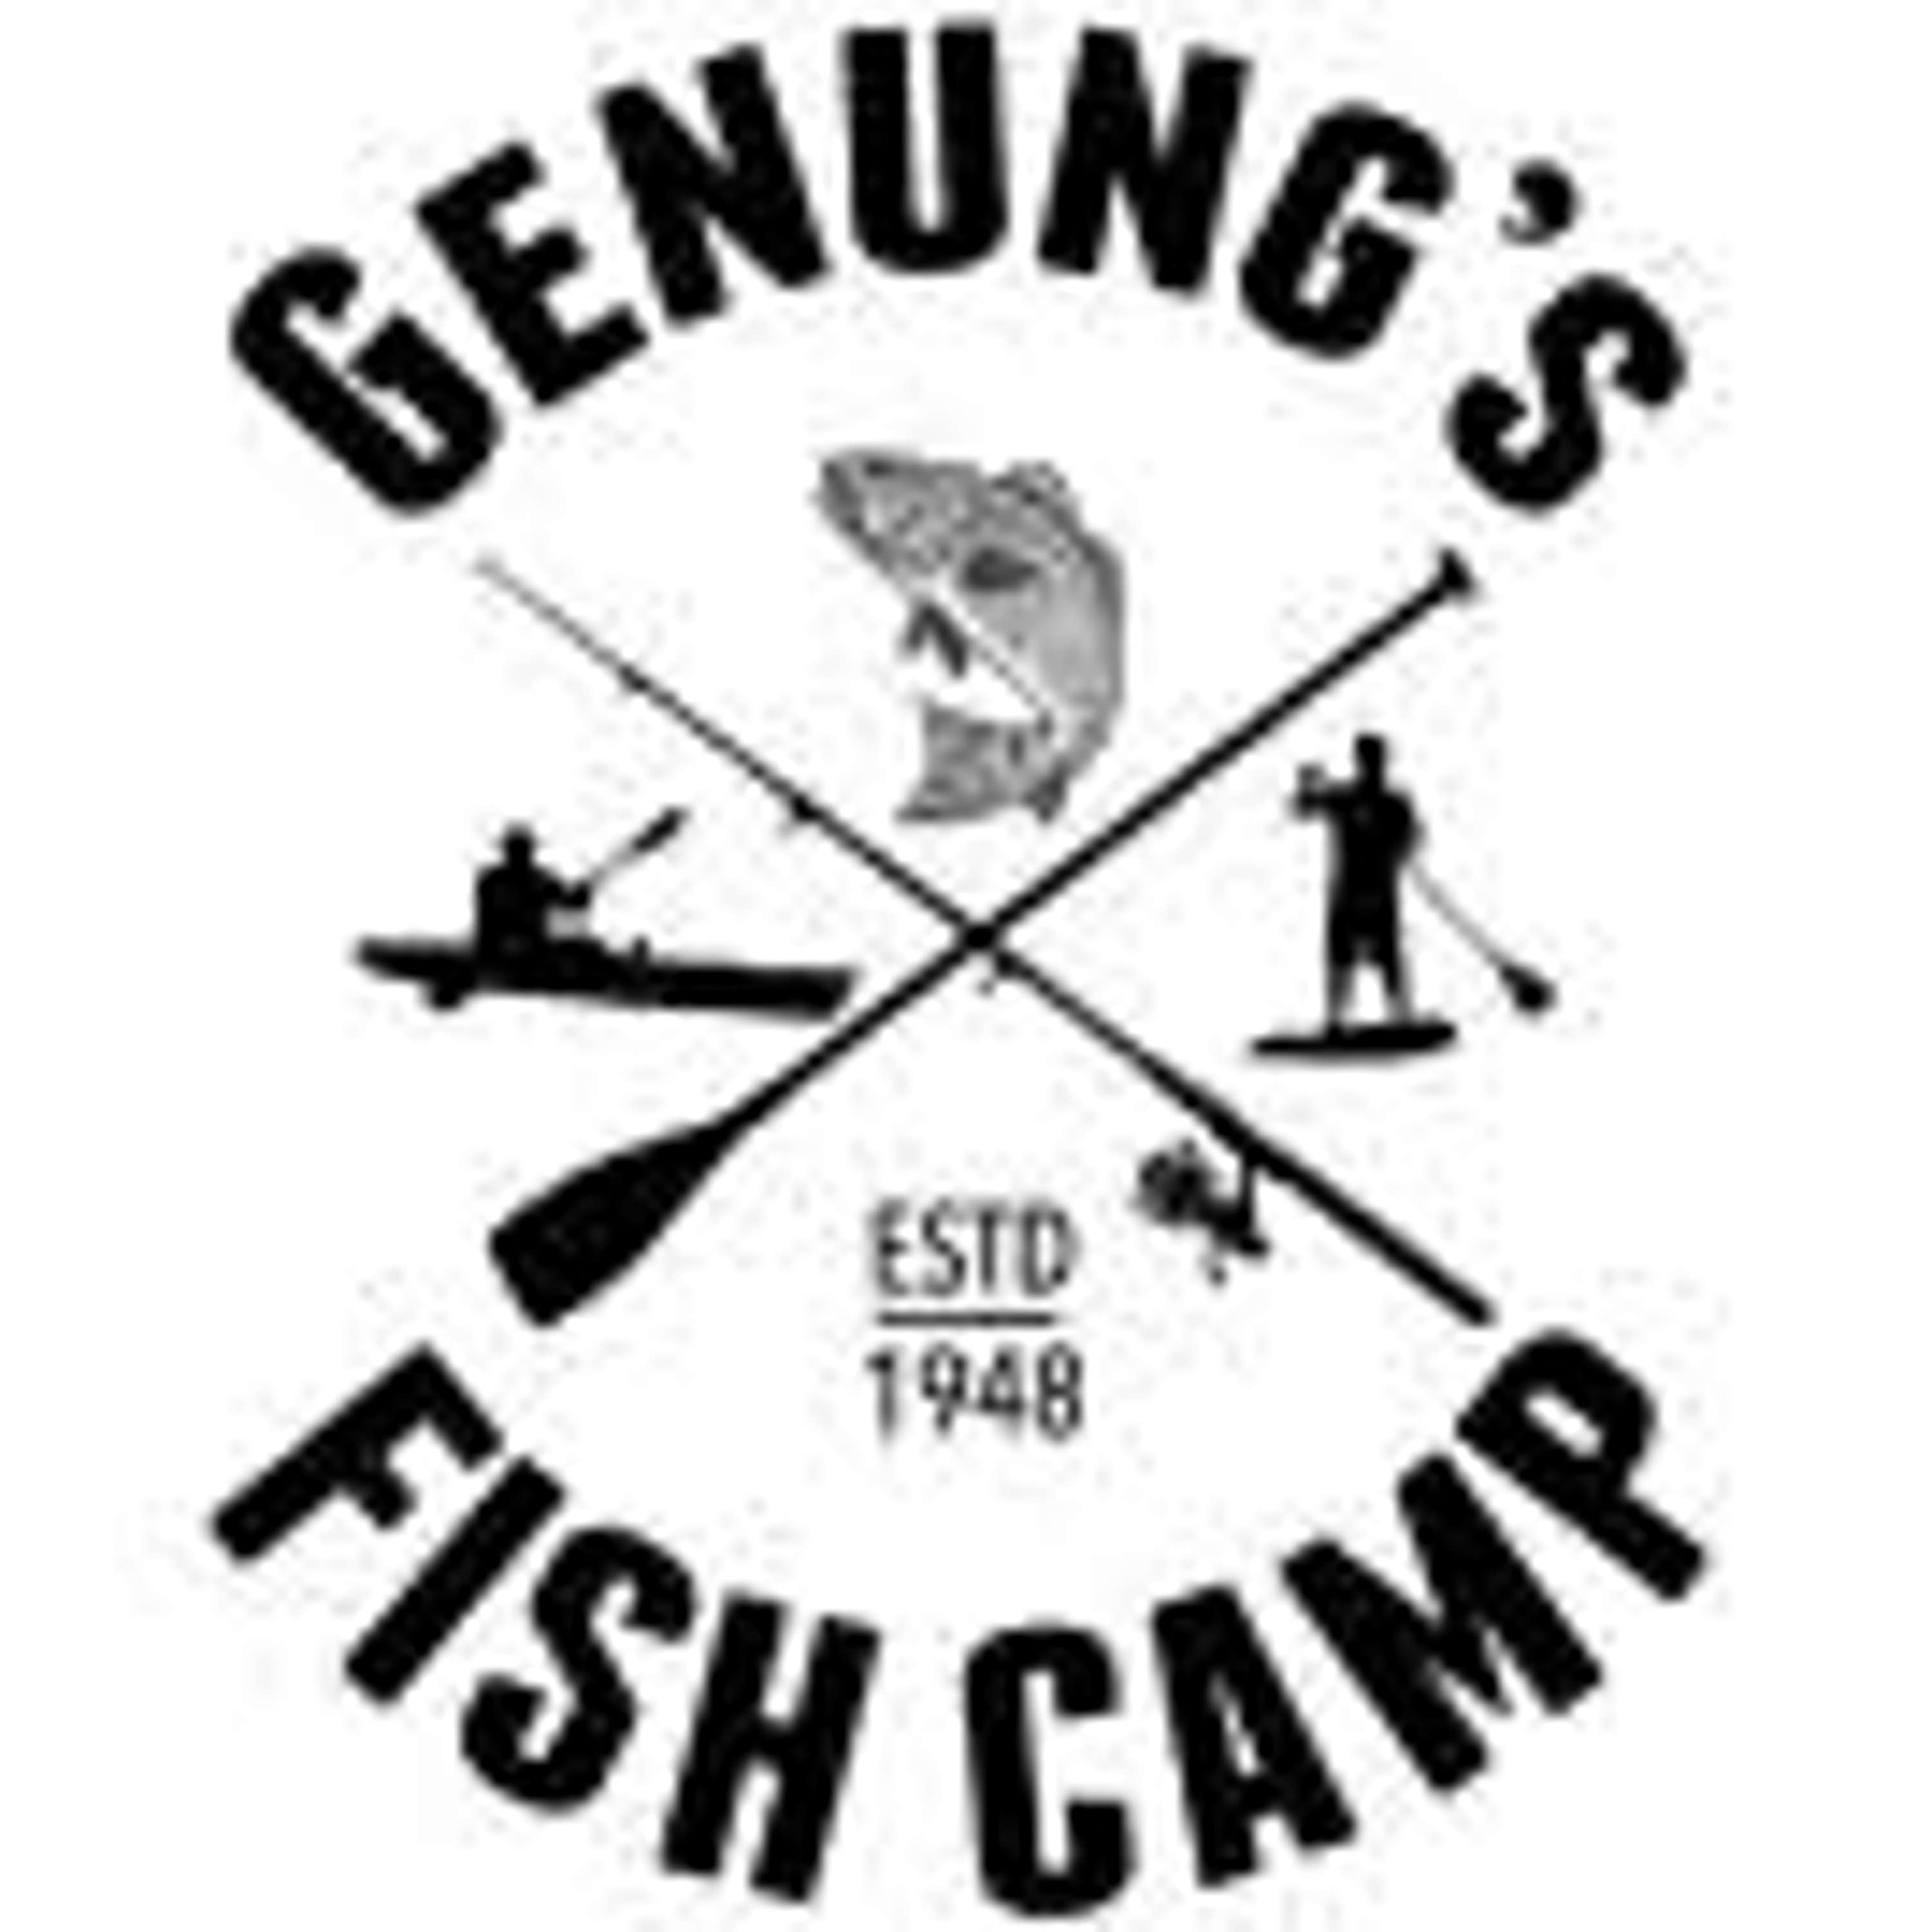 Genungs Fish Camp Owner Adam Morley